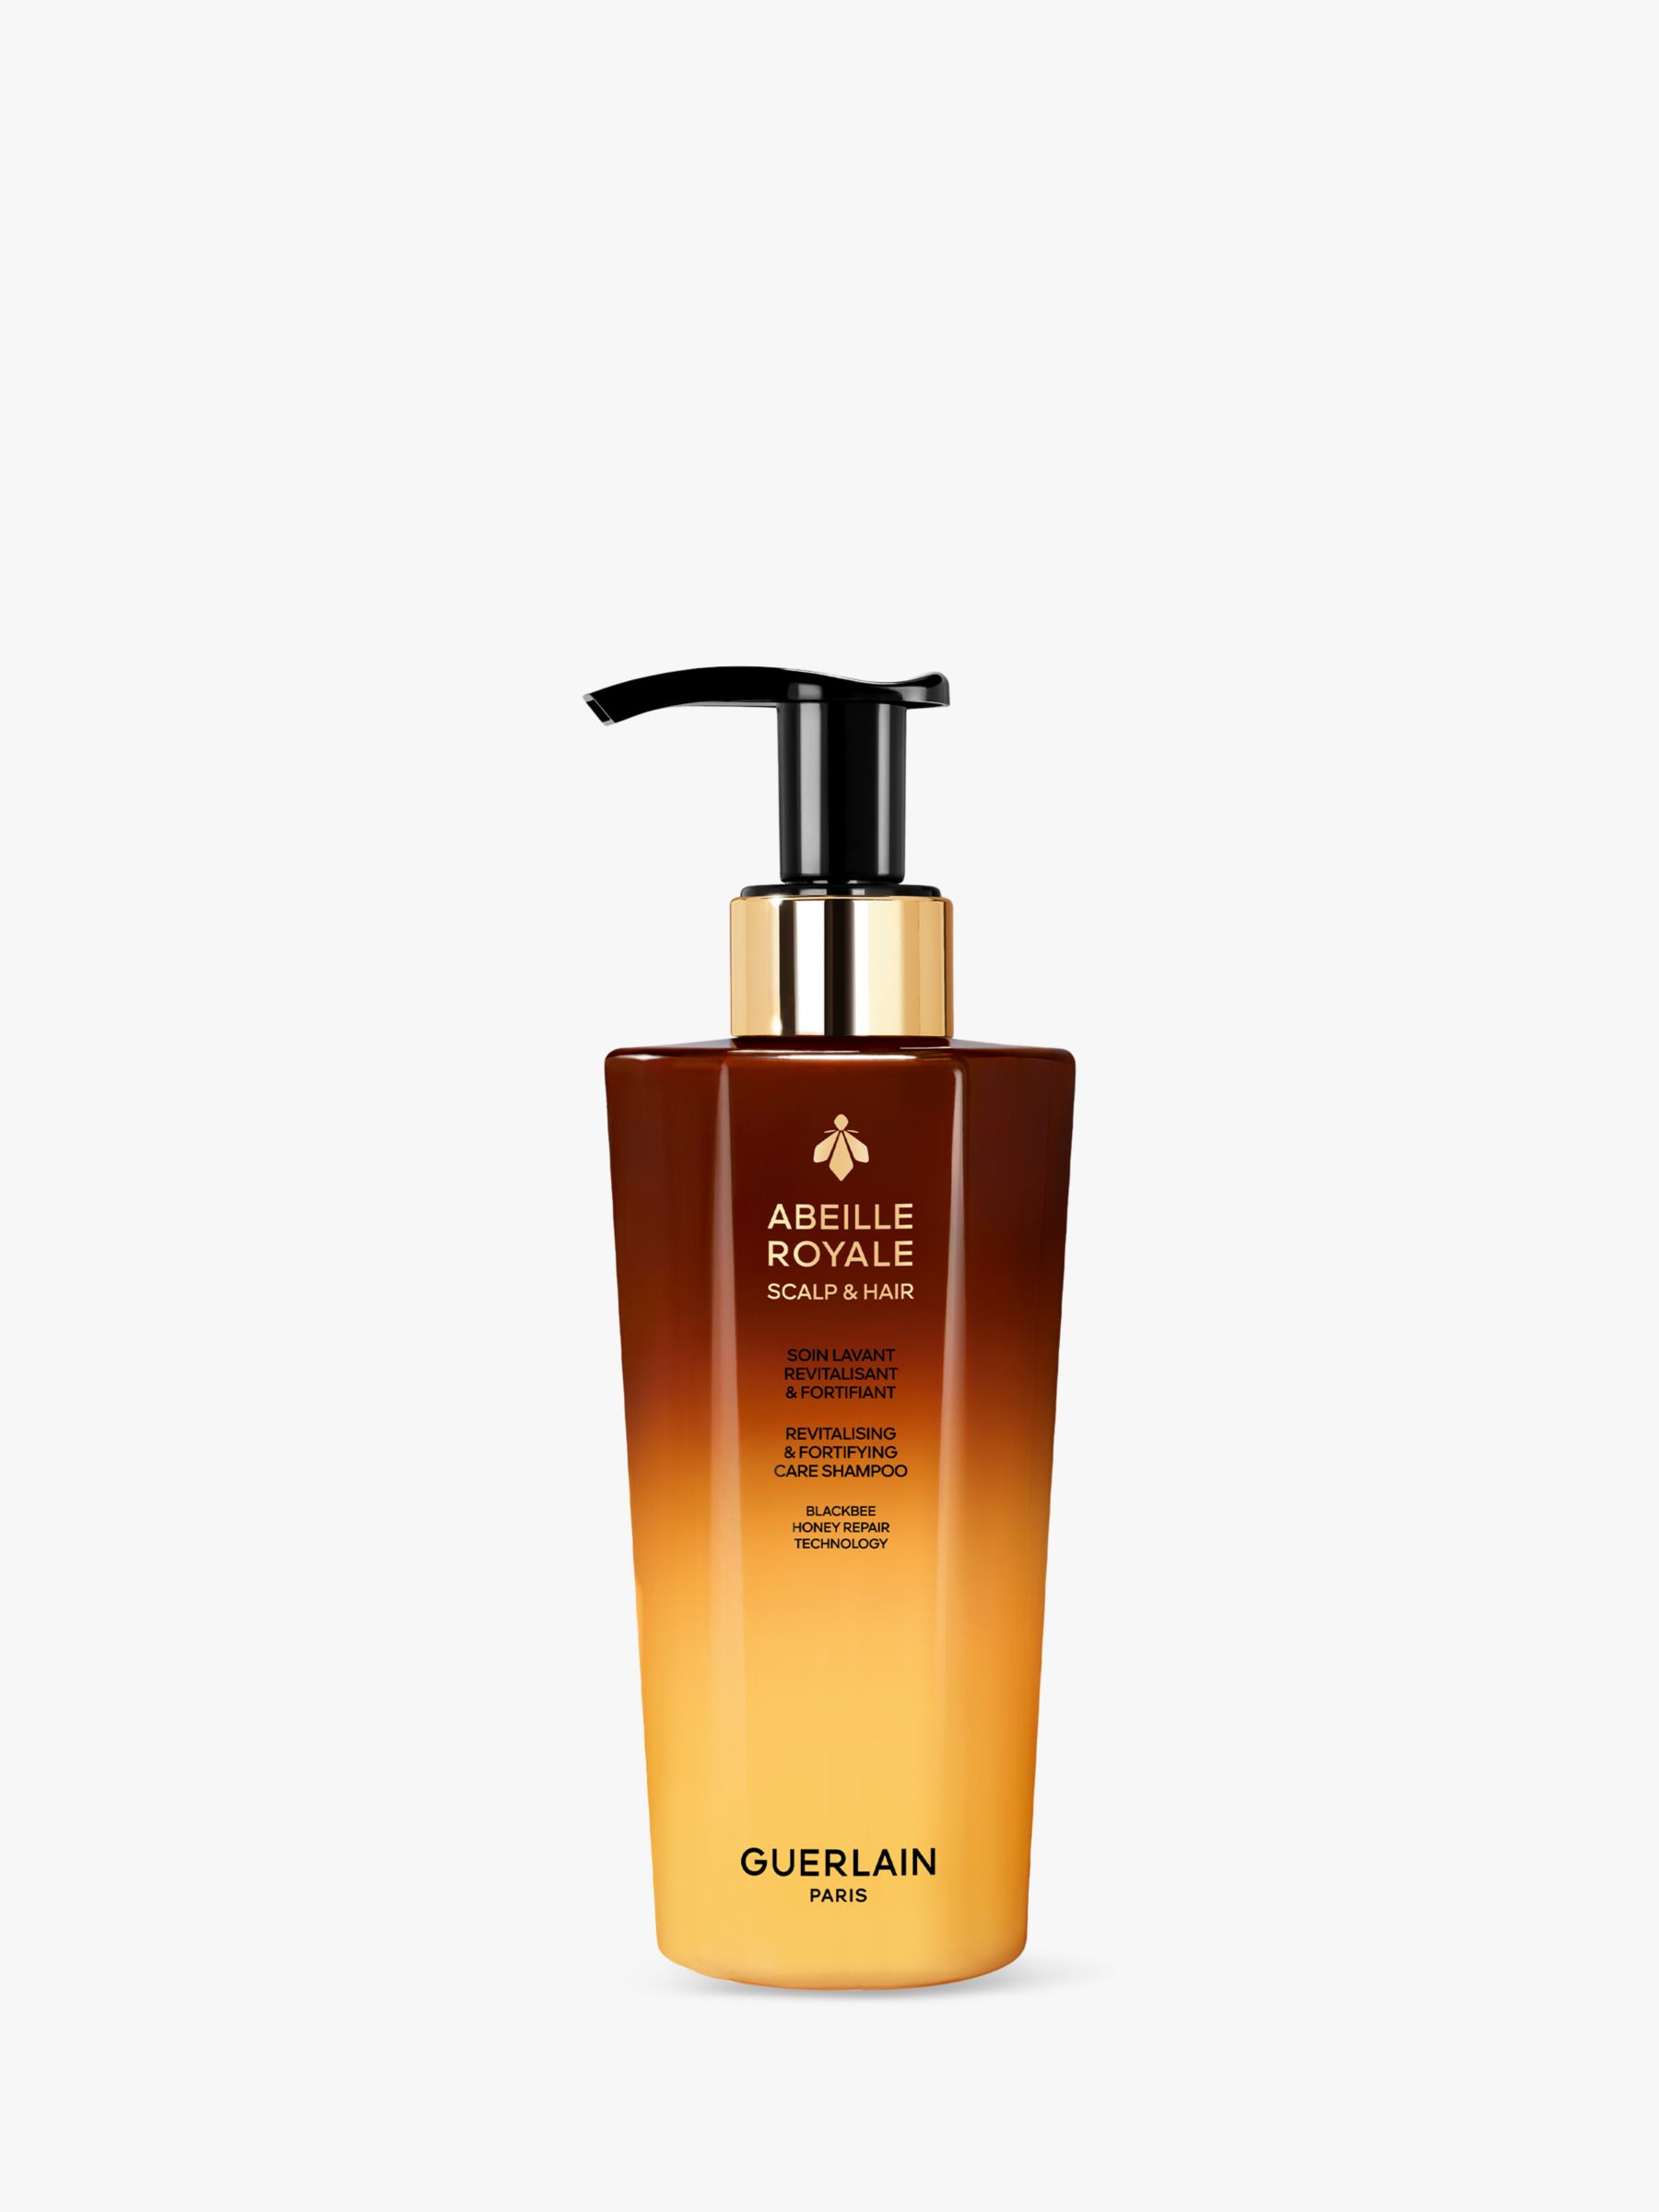 Guerlain Abeille Royale Scalp & Hair Revitalising & Fortifying Care Shampoo, 290ml 1